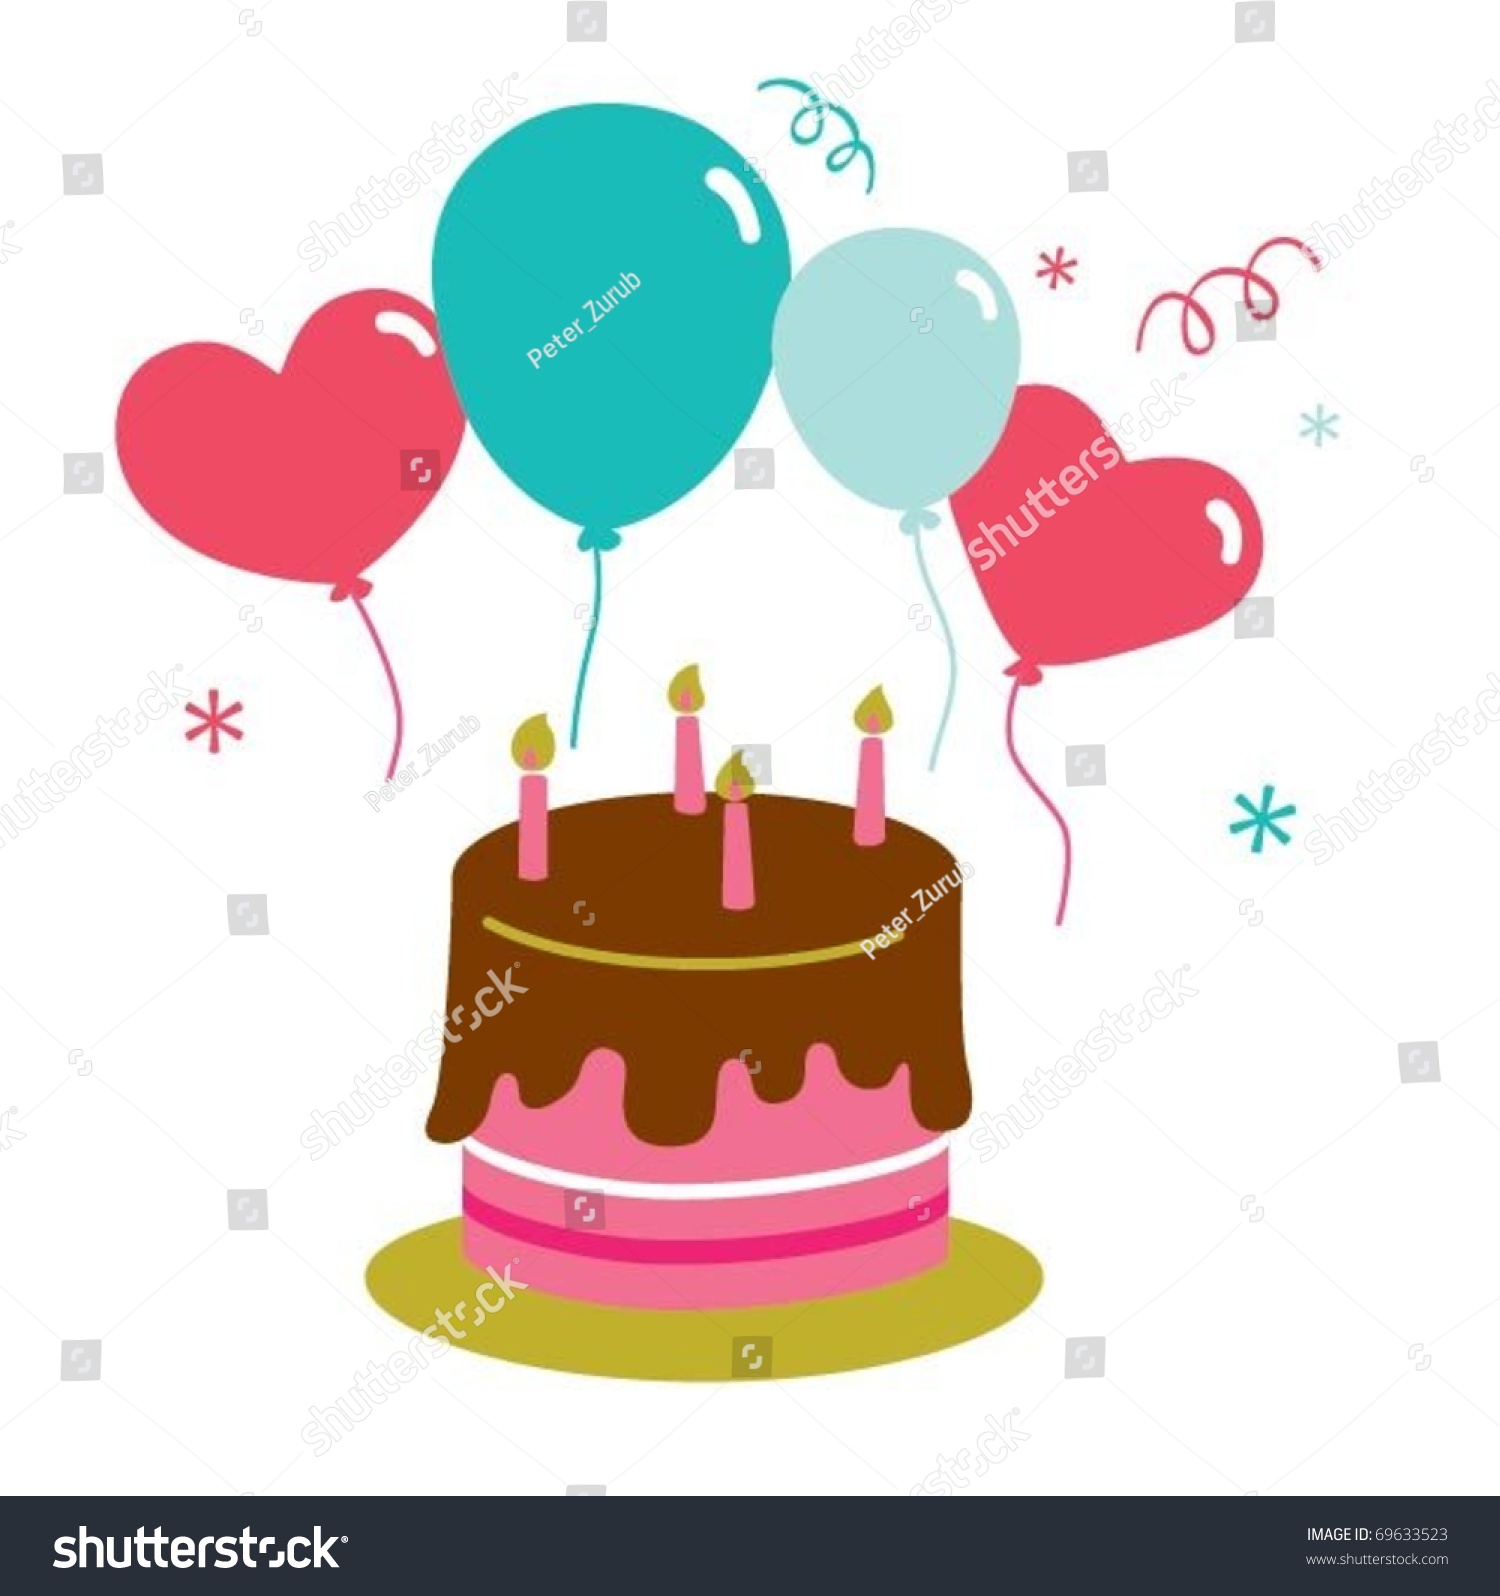 Birthday Cake Balloon Party Vector - 69633523 : Shutterstock